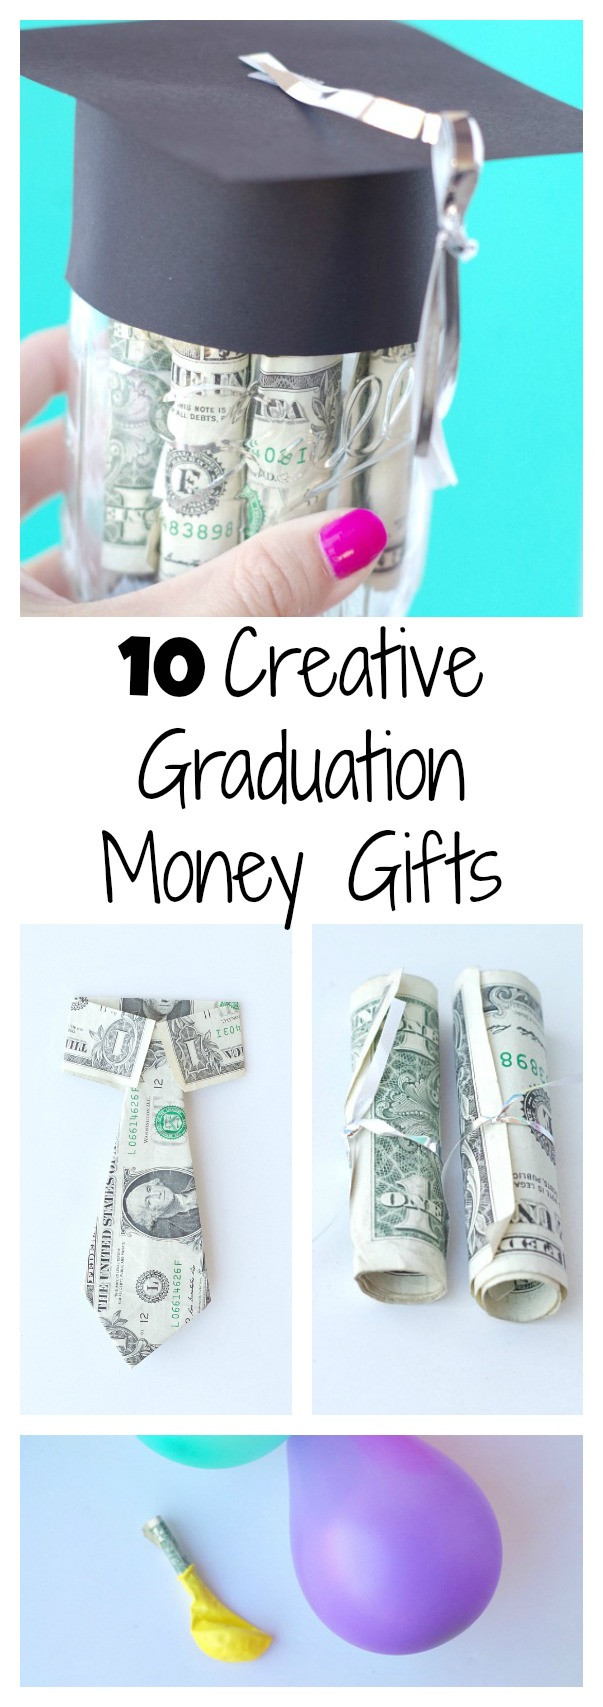 Creative Graduation Gift Ideas
 10 Creative Graduation Money Gifts – Val Event Gal